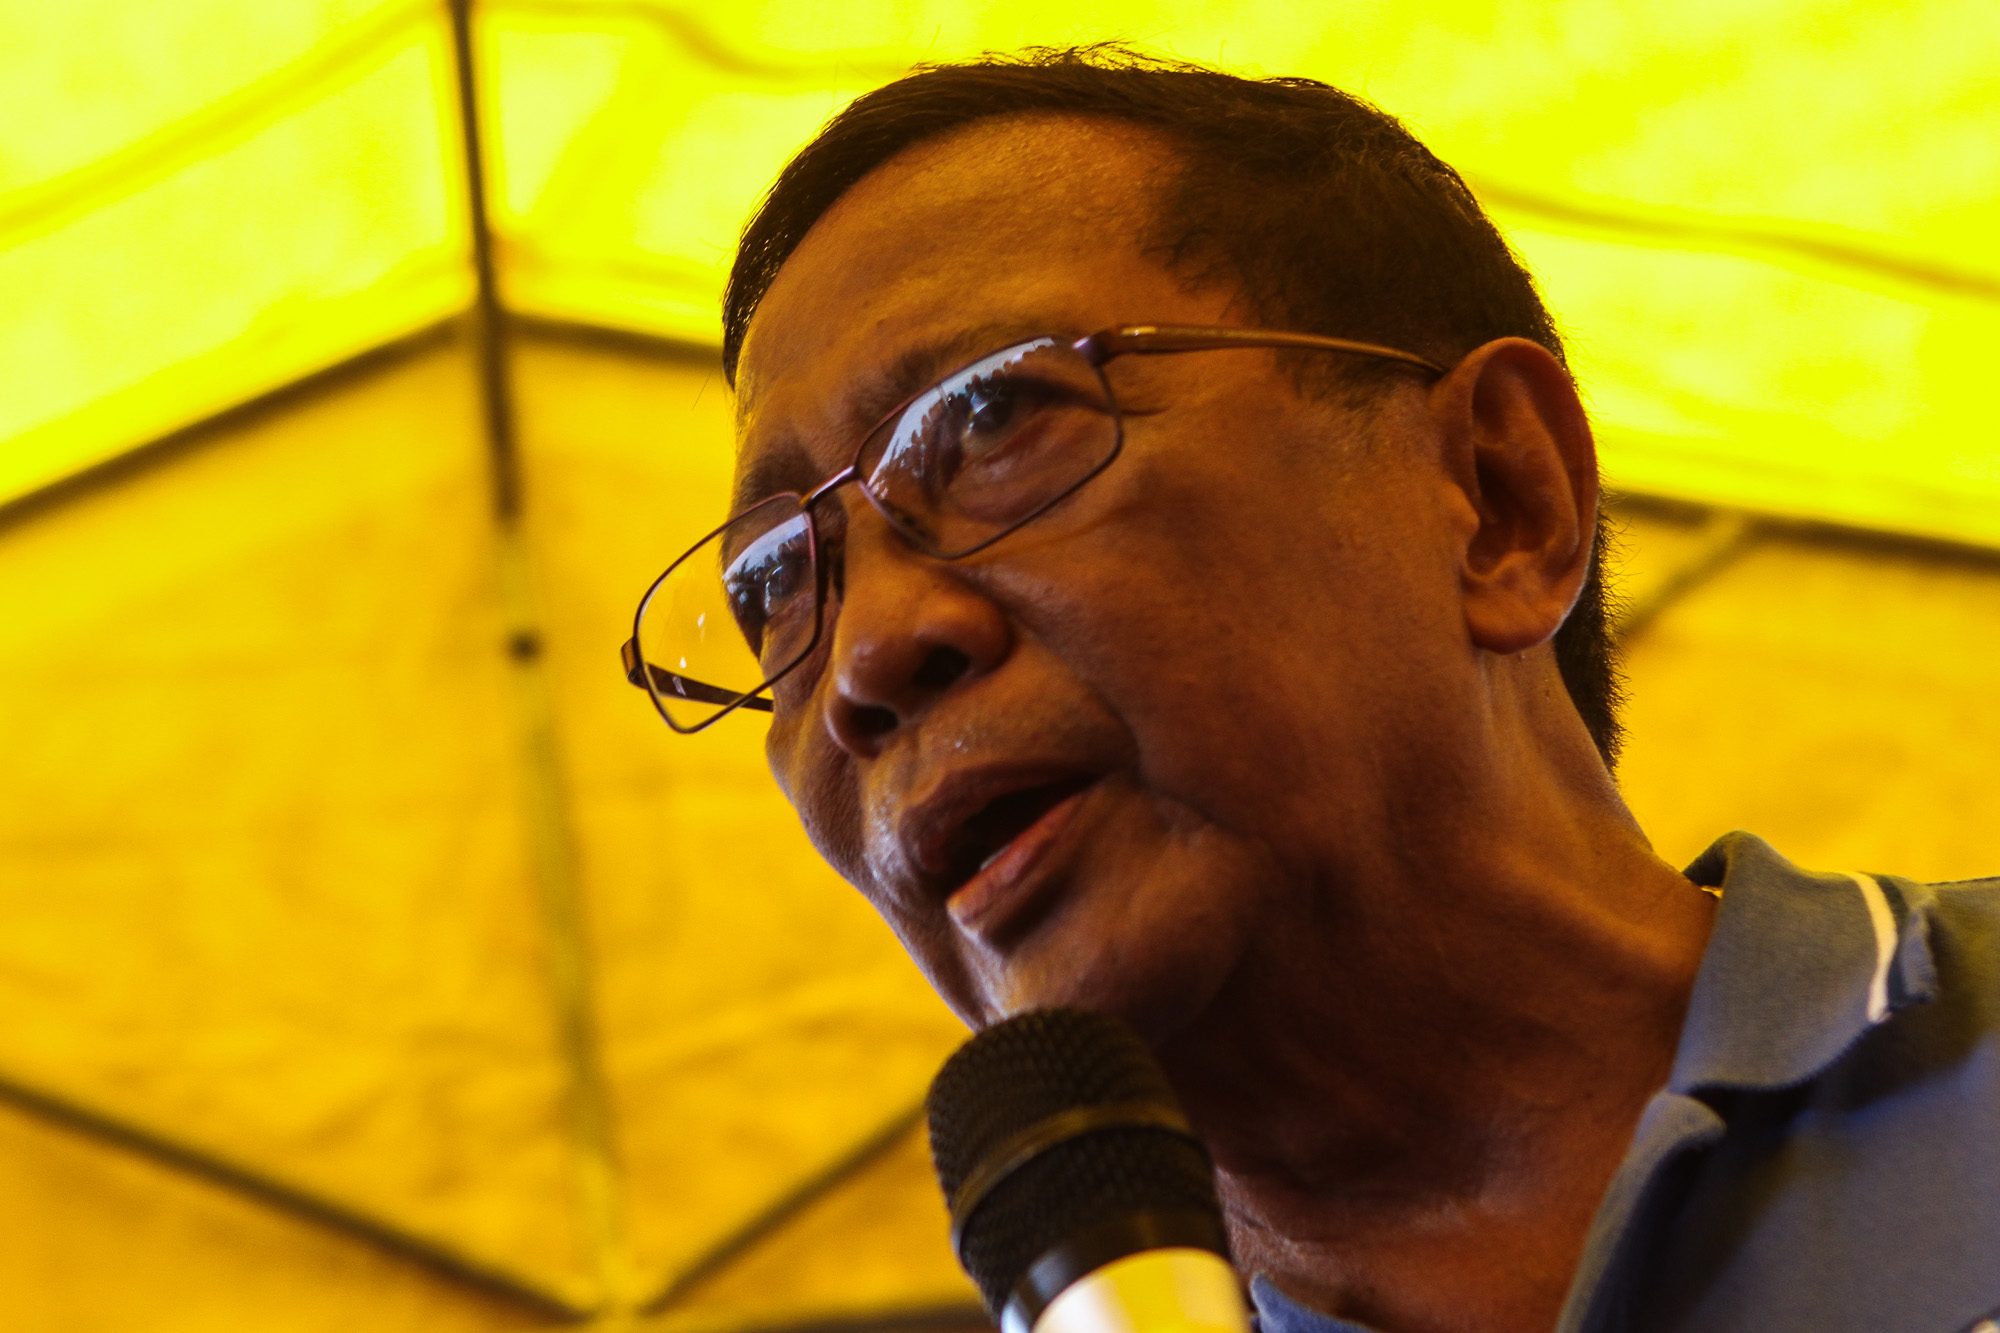 BIR probe on UMak part of ‘conspiracy’ vs VP – Binay camp